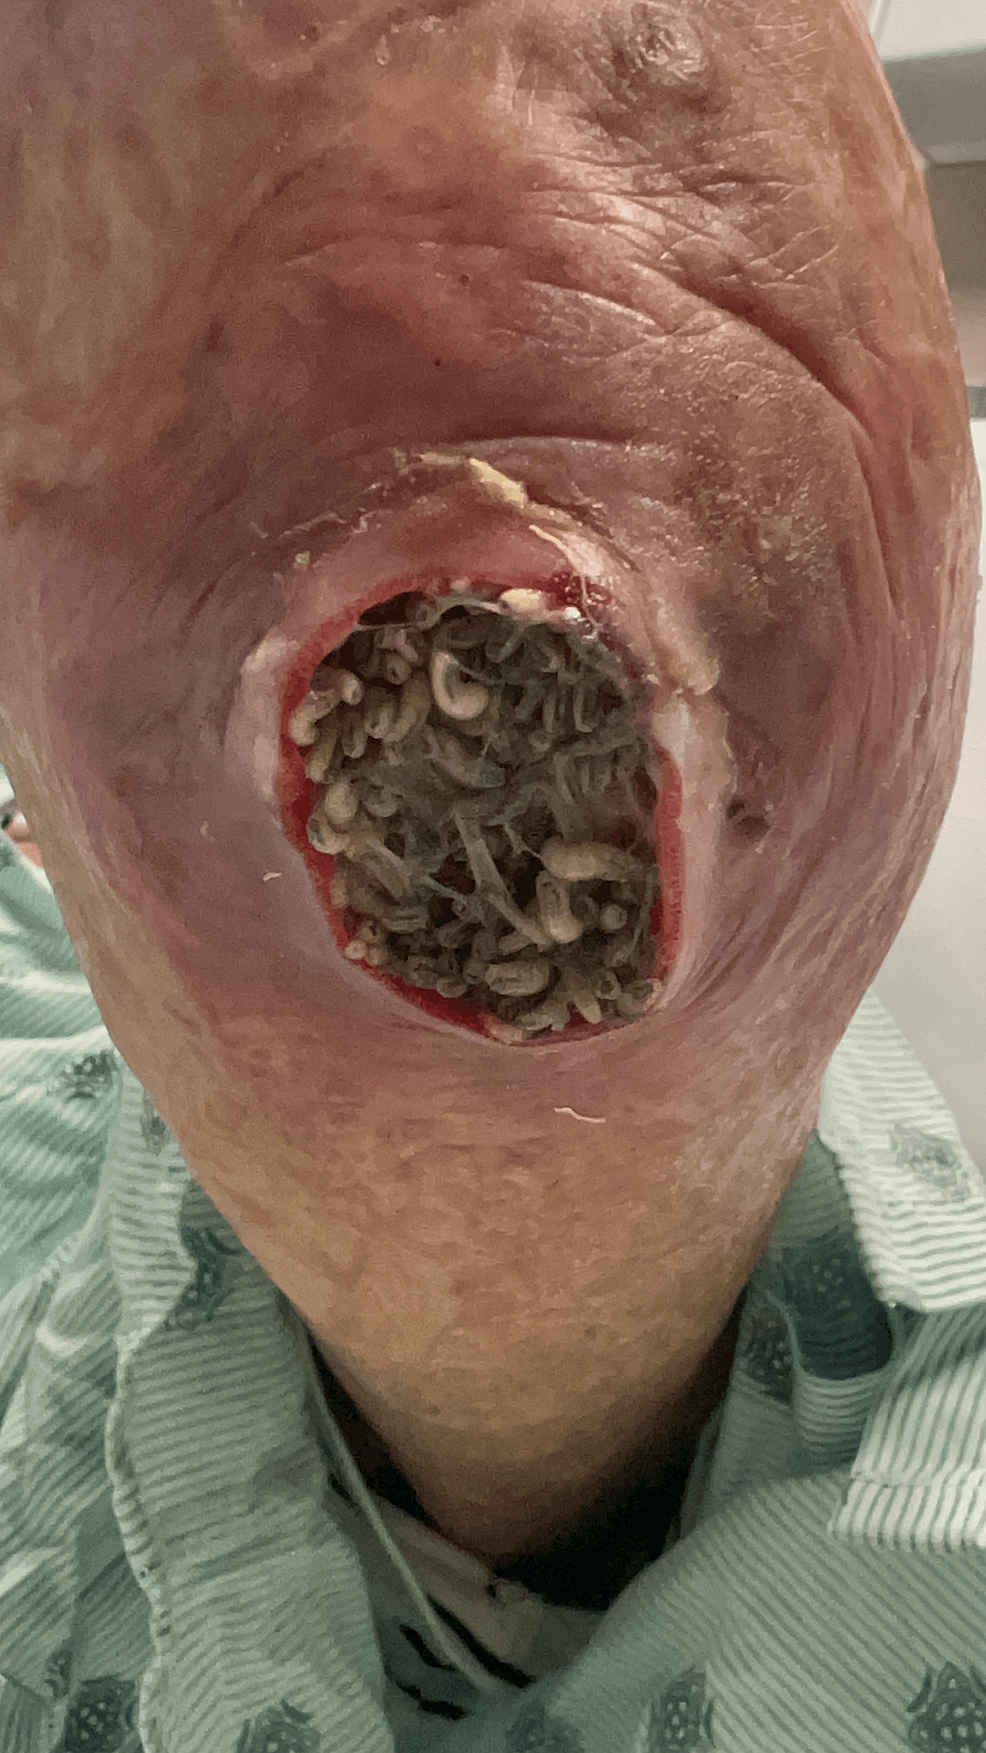 Cureus  Flesh Fly Maggot-Infected Abscess in a Burn Victim